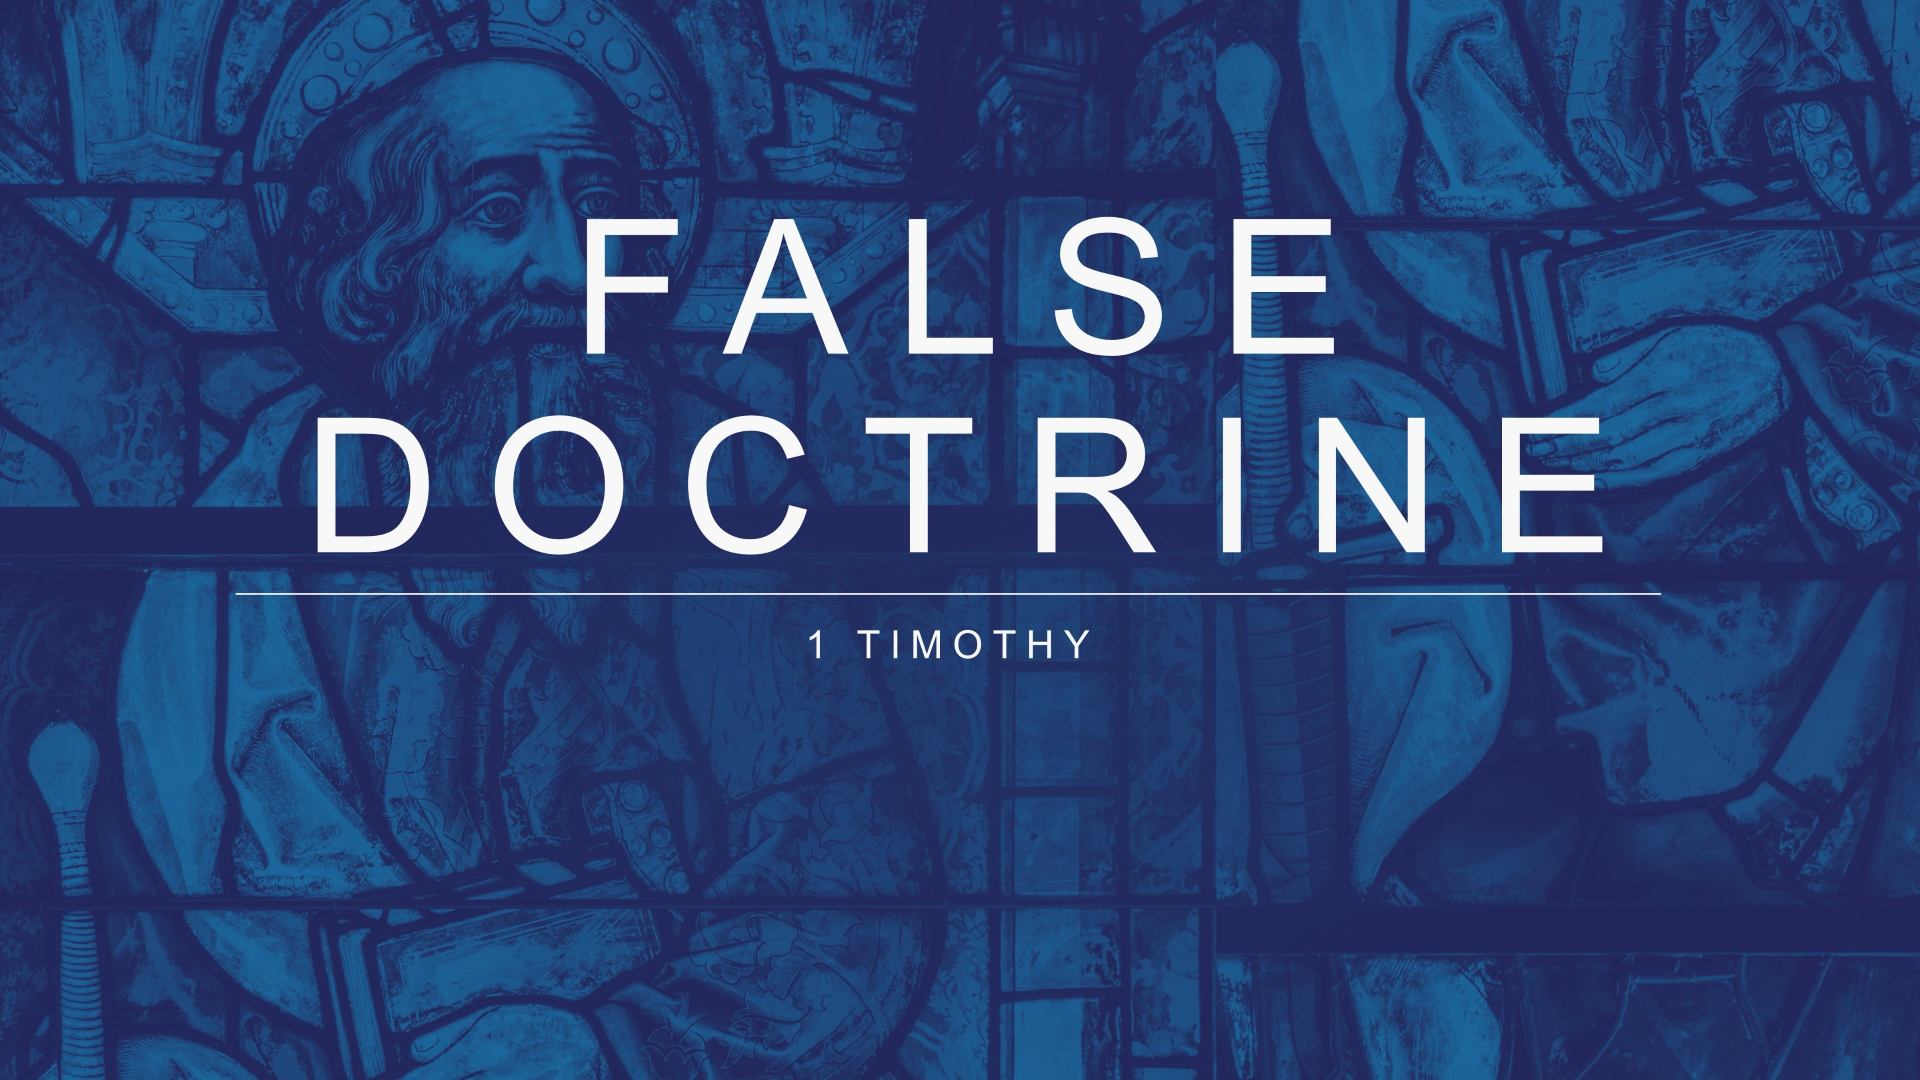 22.2.13p - 1 Timothy - False Doctrine - Title.001.png